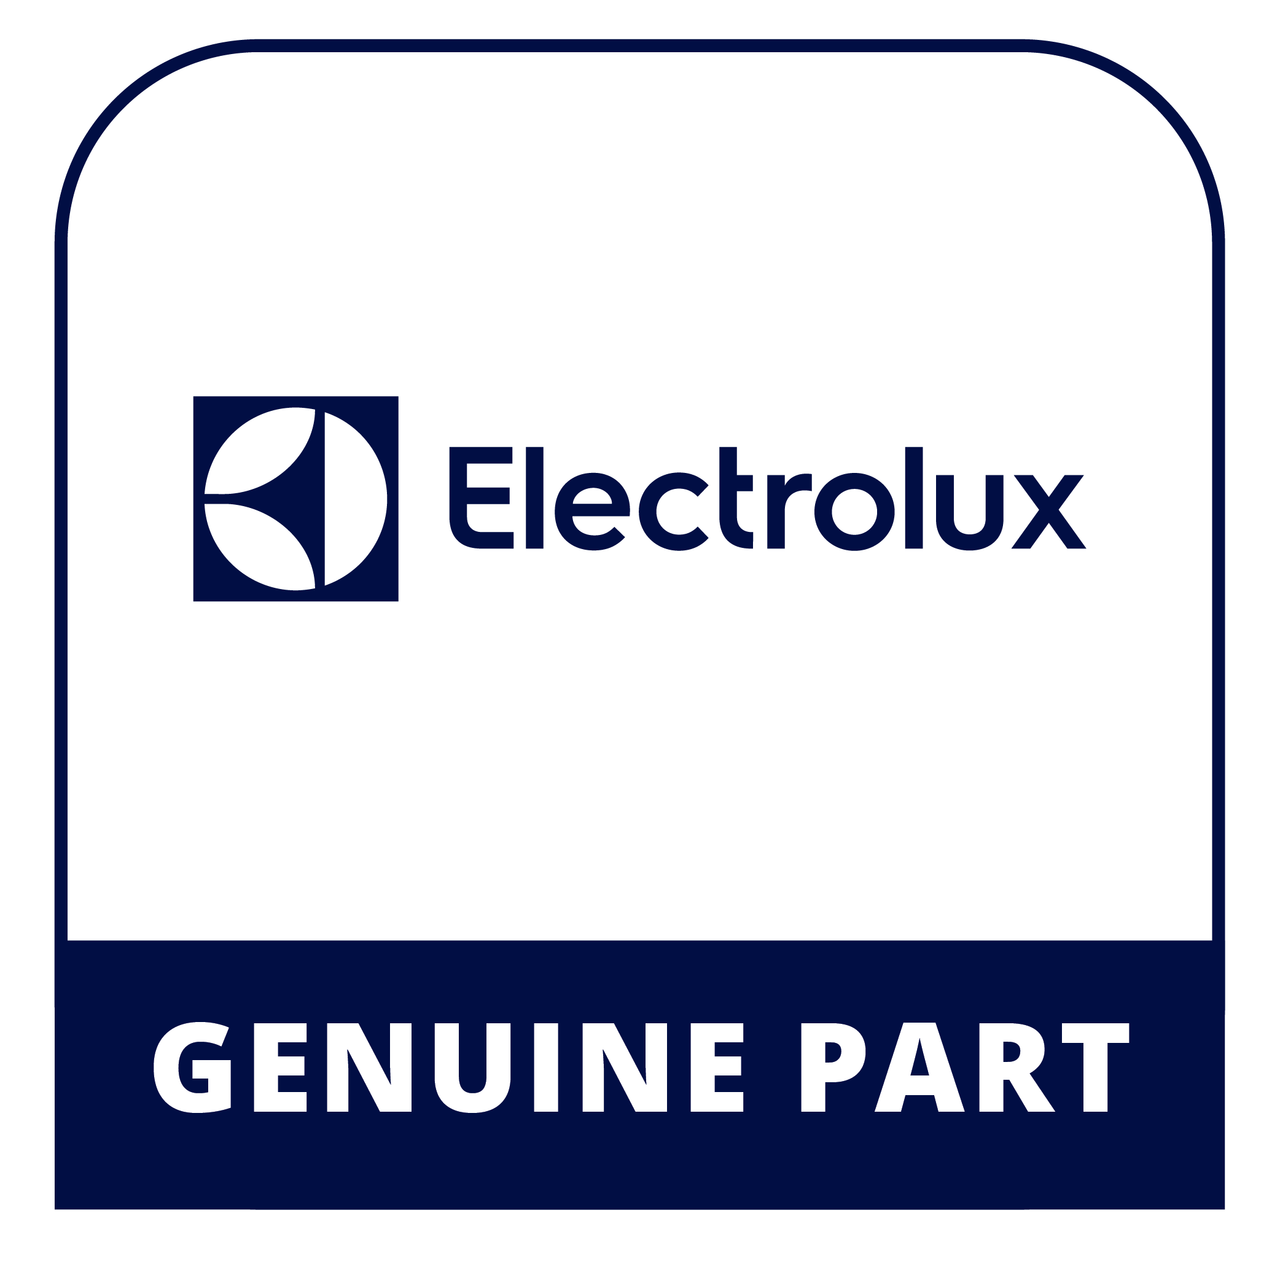 Frigidaire - Electrolux 405549614 Bushing Kit - Genuine Electrolux Part